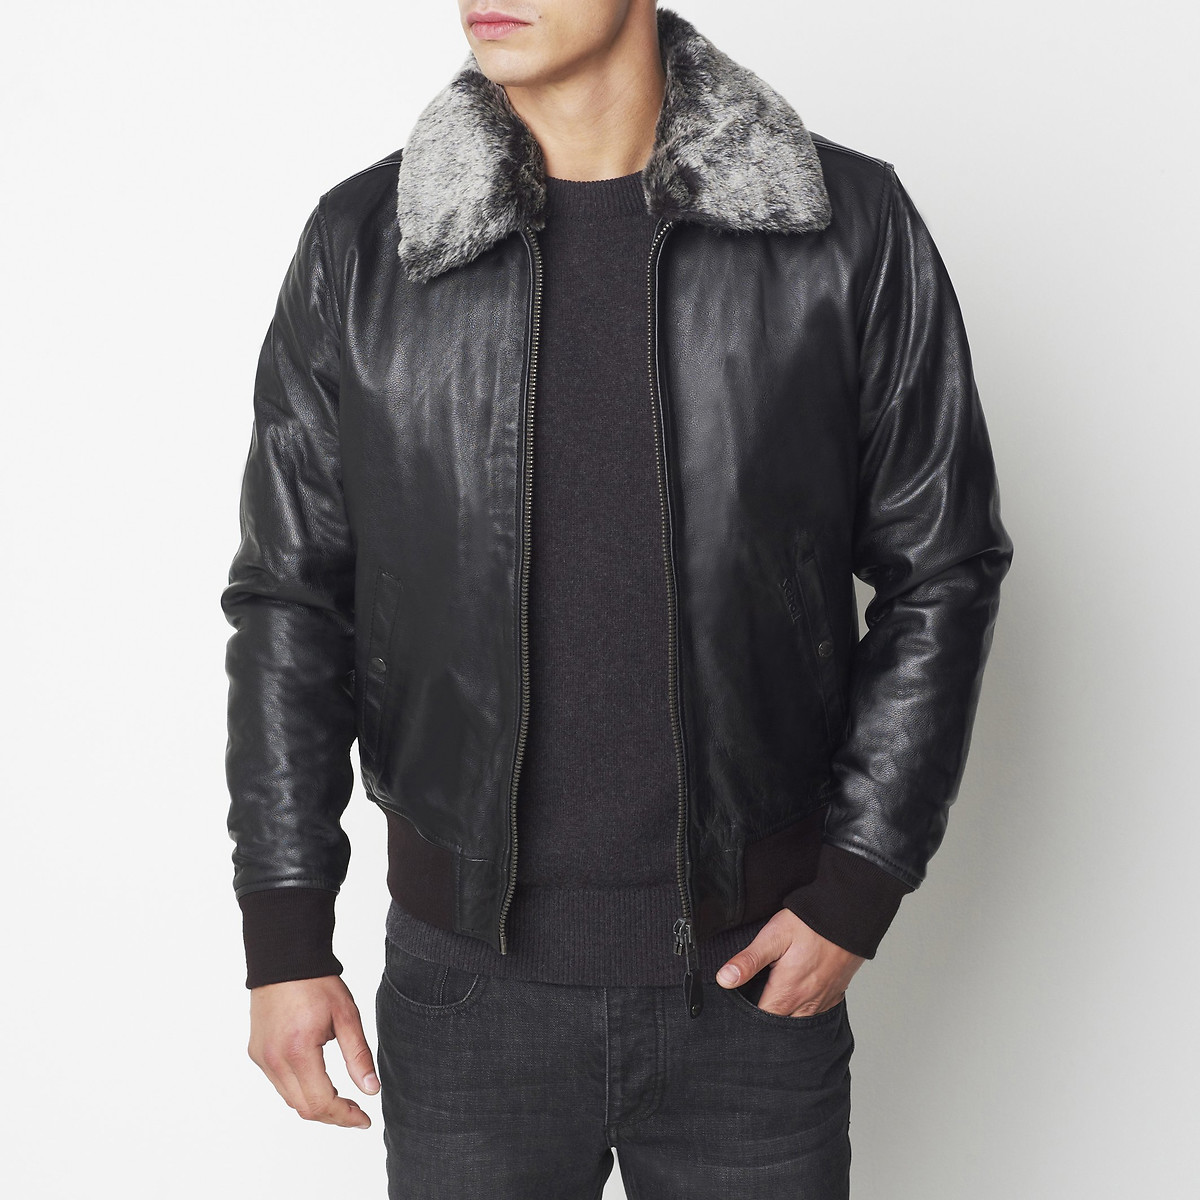 lc930d leather aviator jacket, mid-season